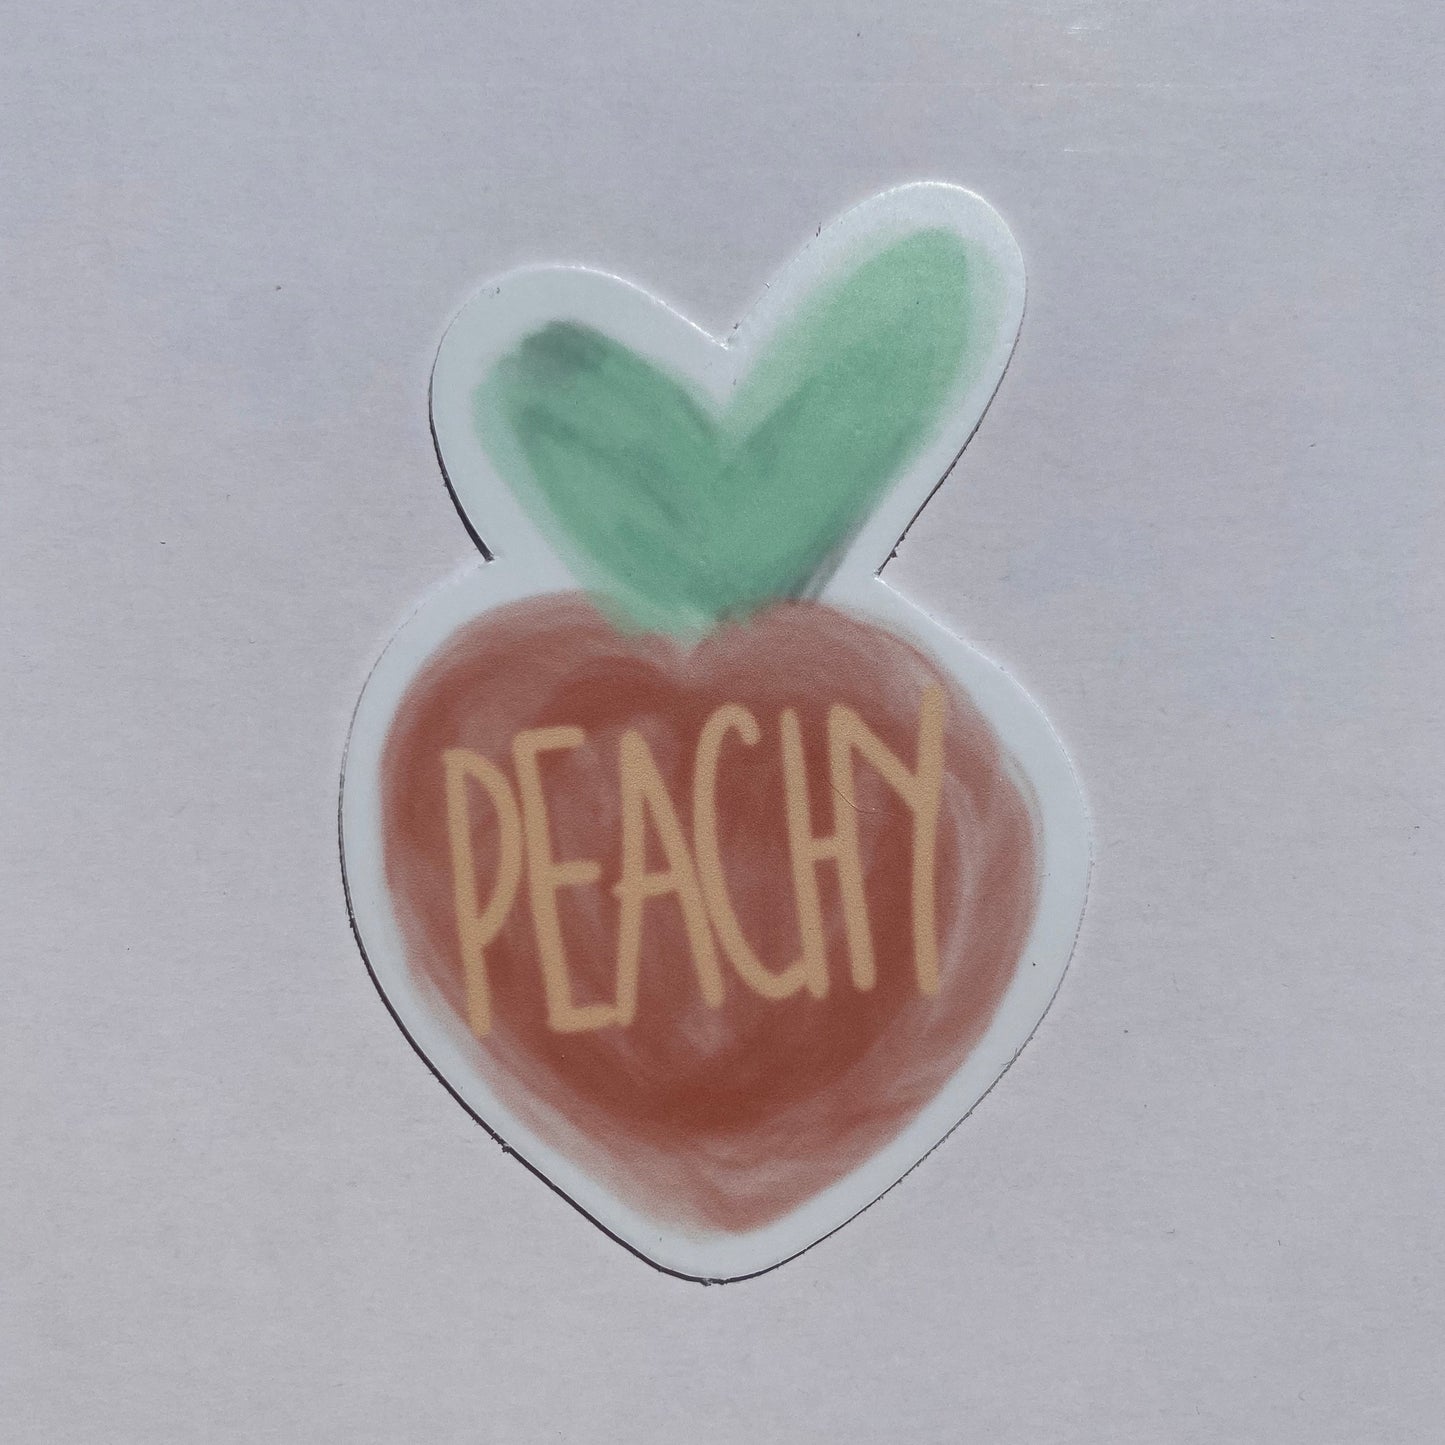 CLEAR Peachy Waterproof Vinyl Sticker